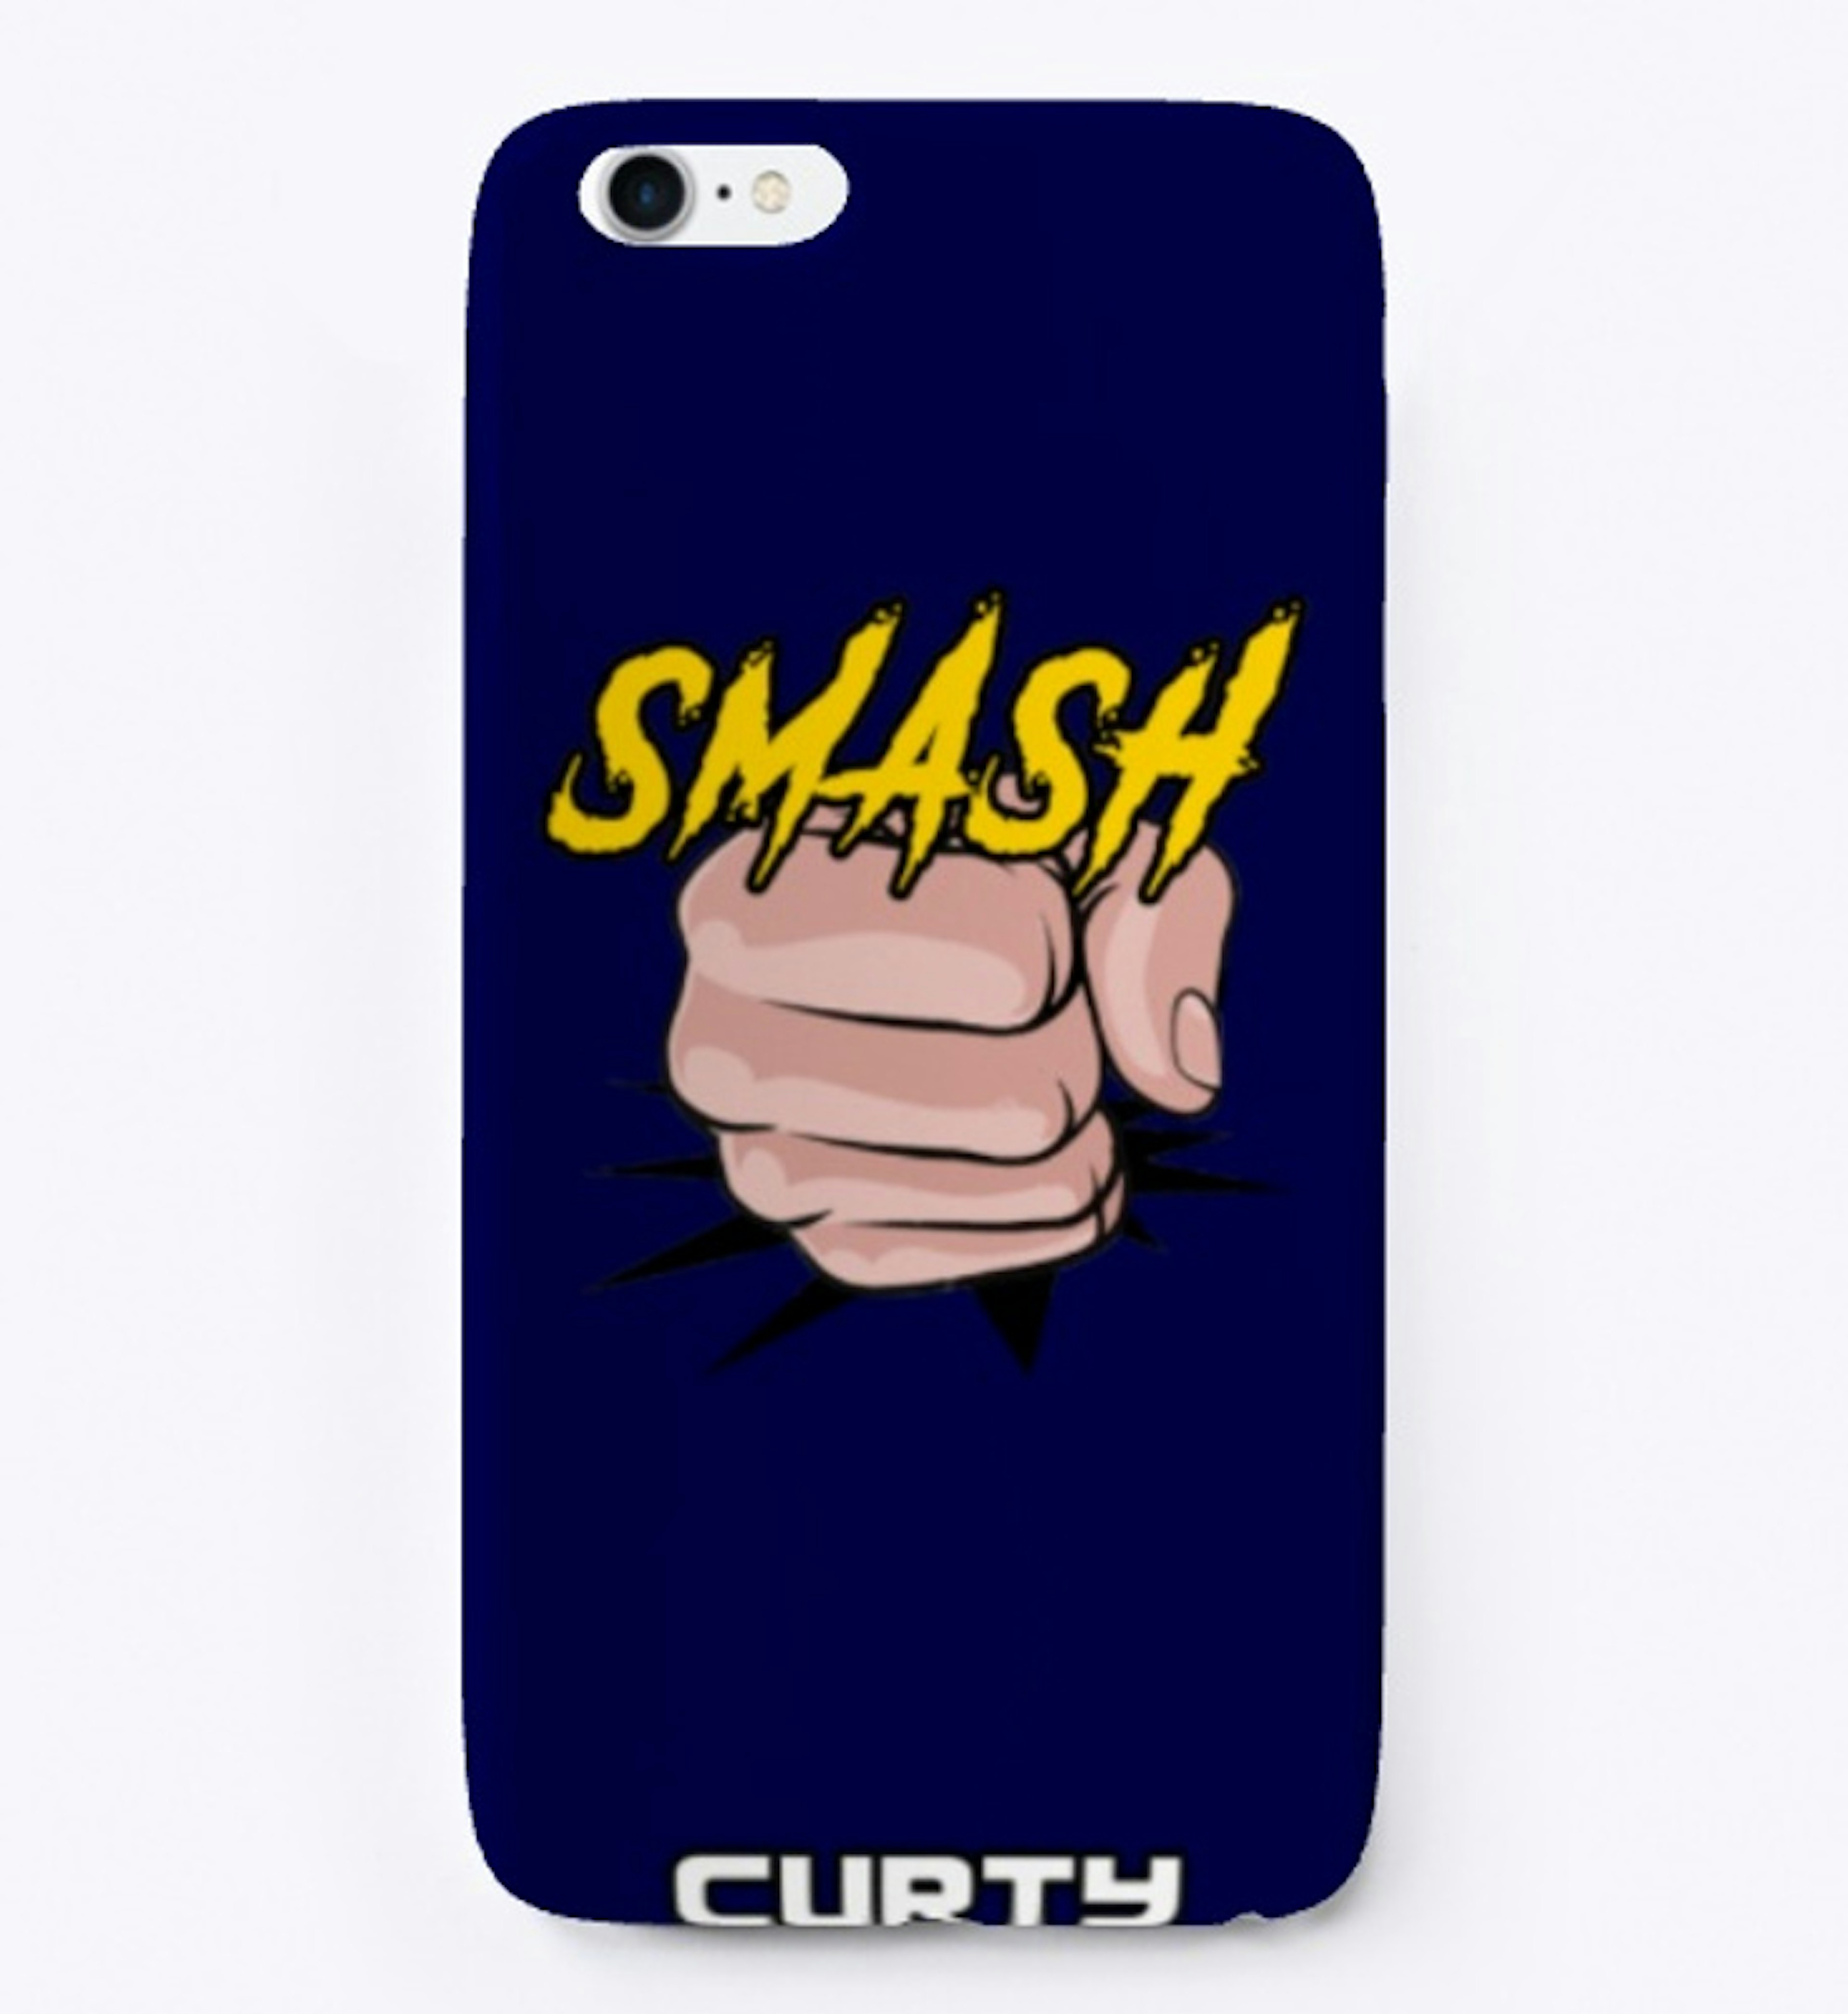 Curty - Smash